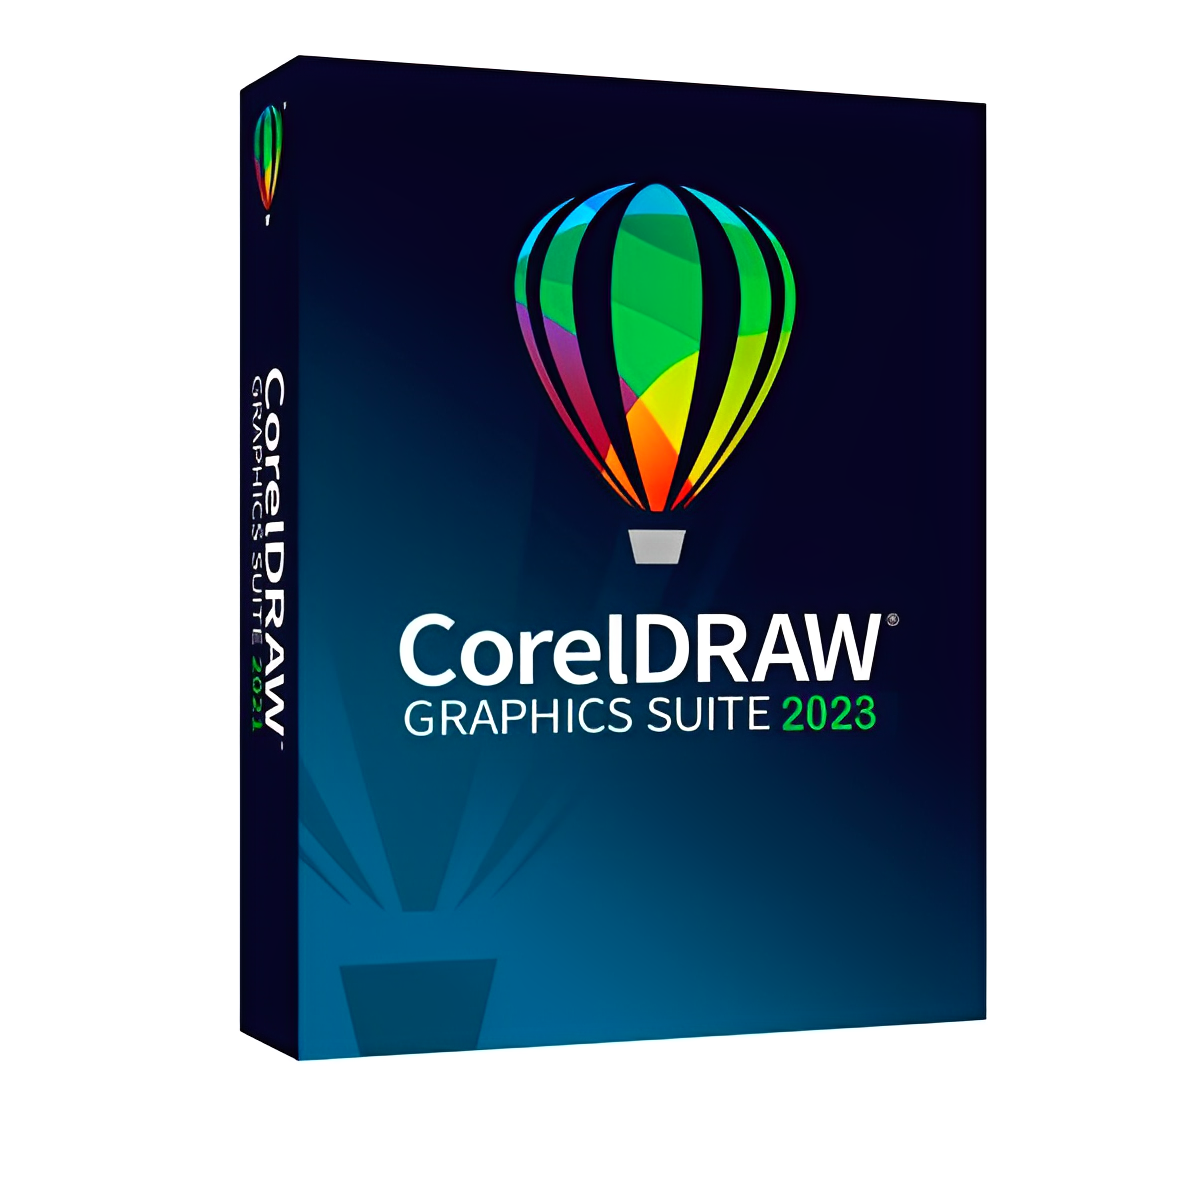 CorelDRAW Graphics Suite 2023 Original License Lifetime Activation